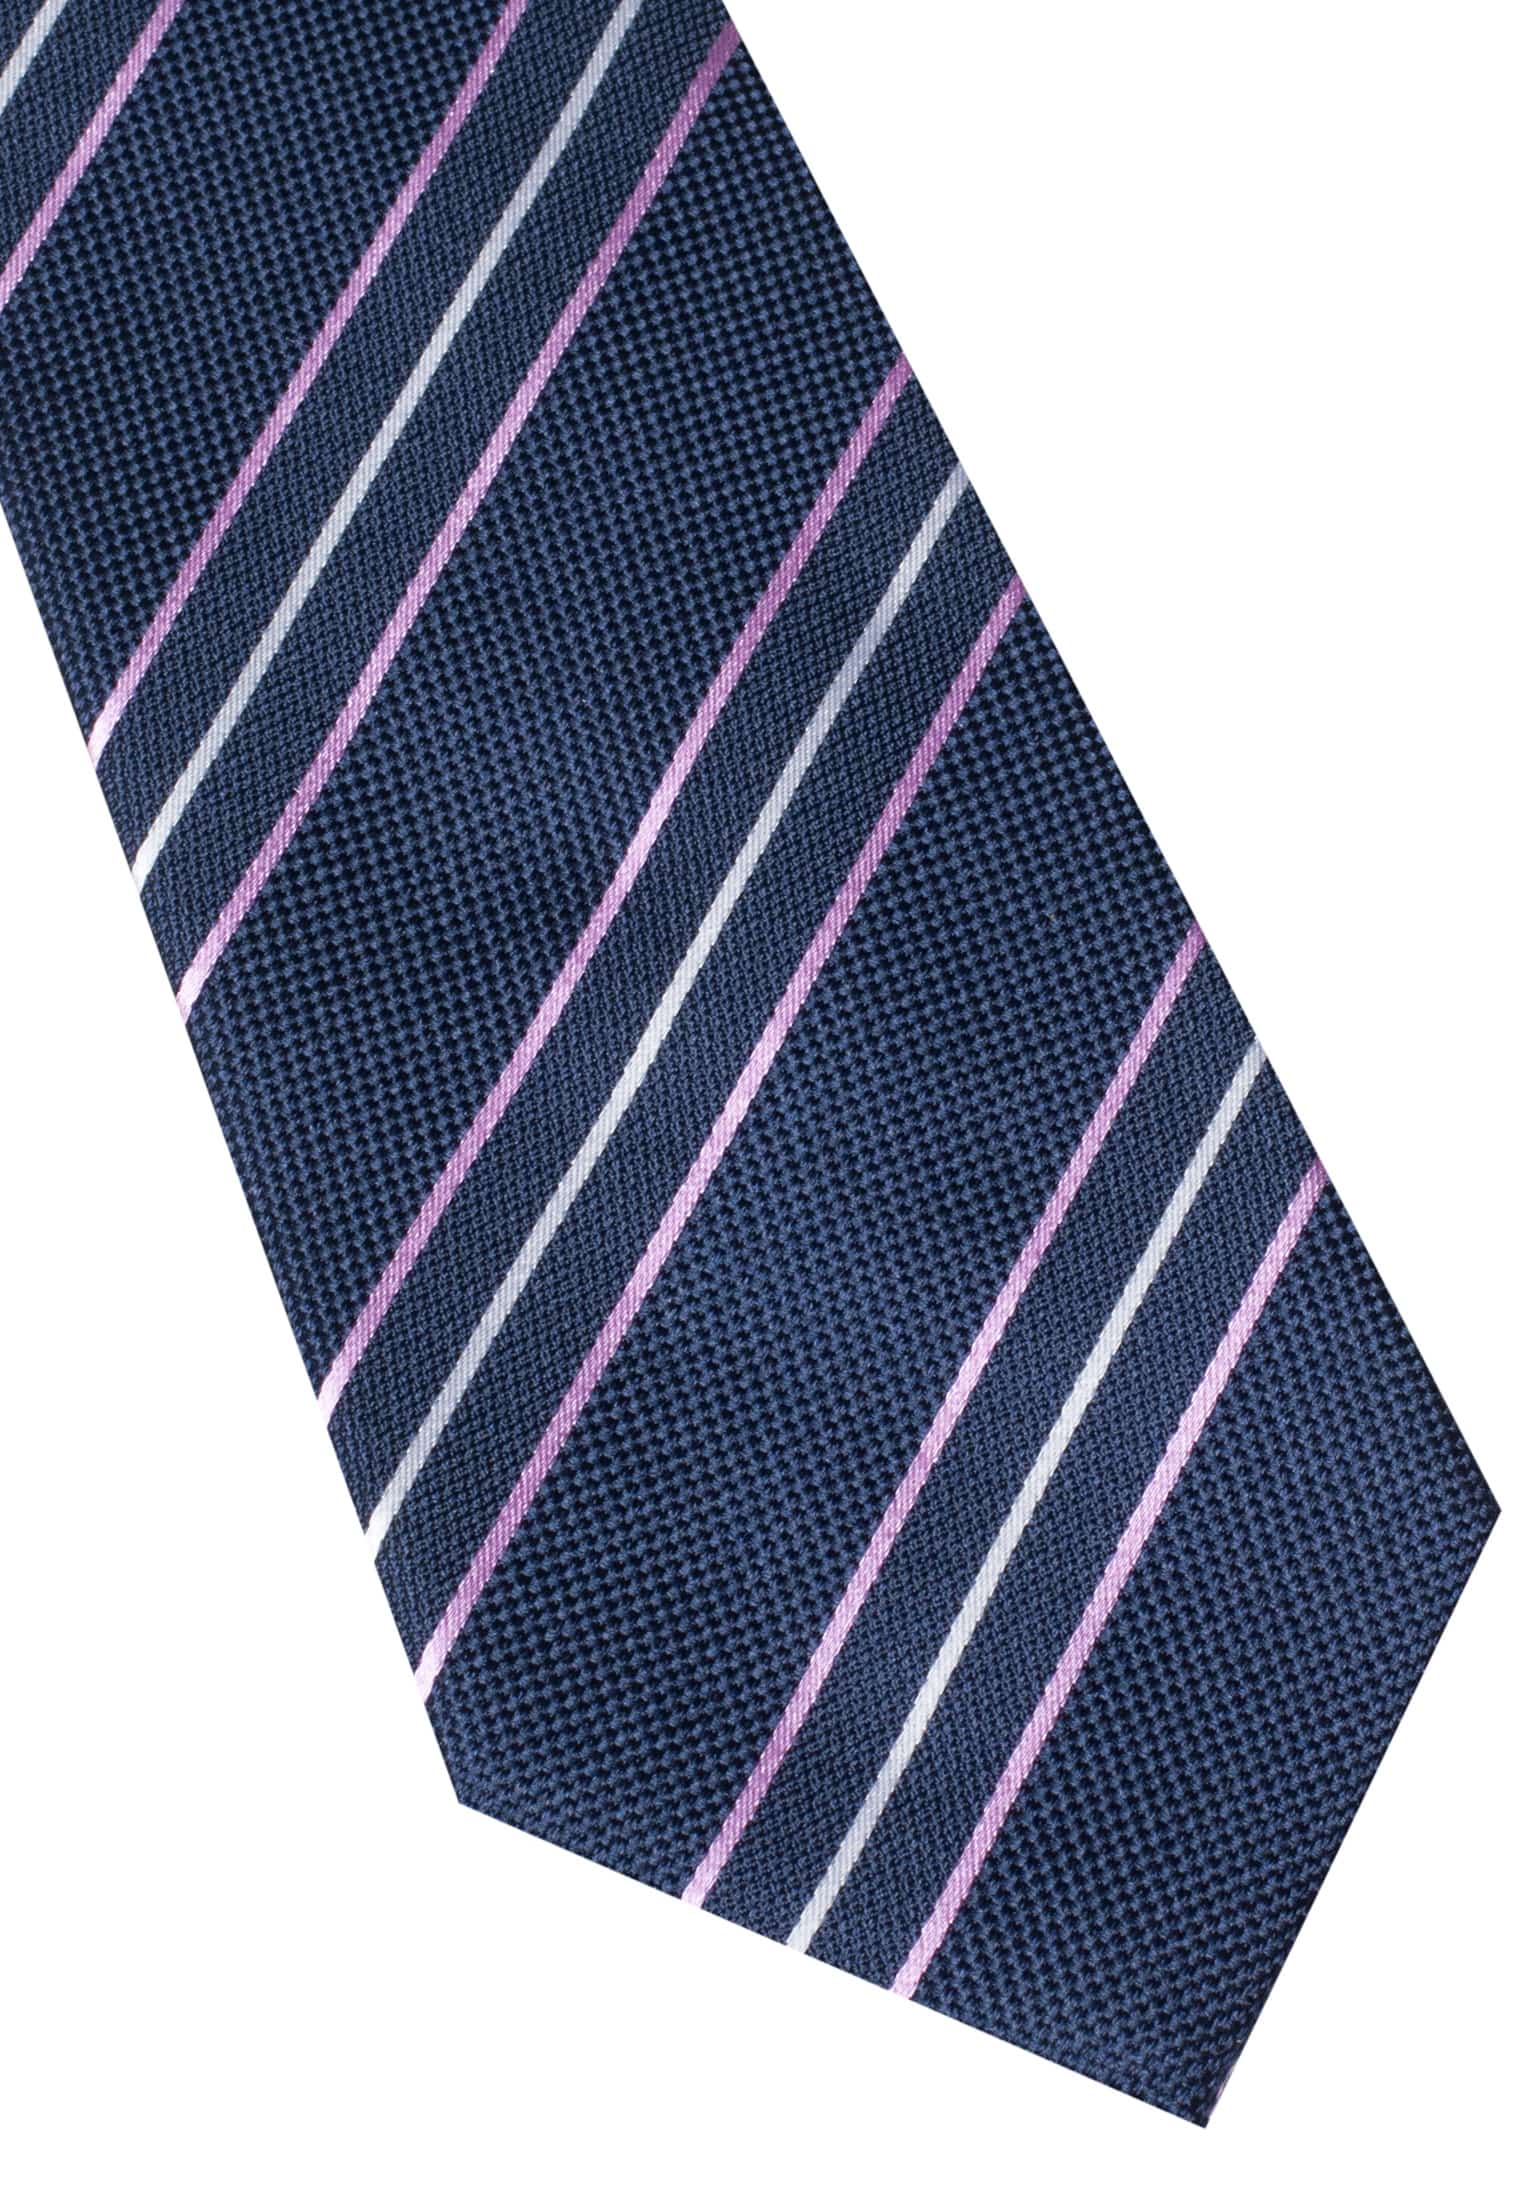 Krawatte in navy/rosa gestreift | 1AC00533-81-90-142 navy/rosa | | 142